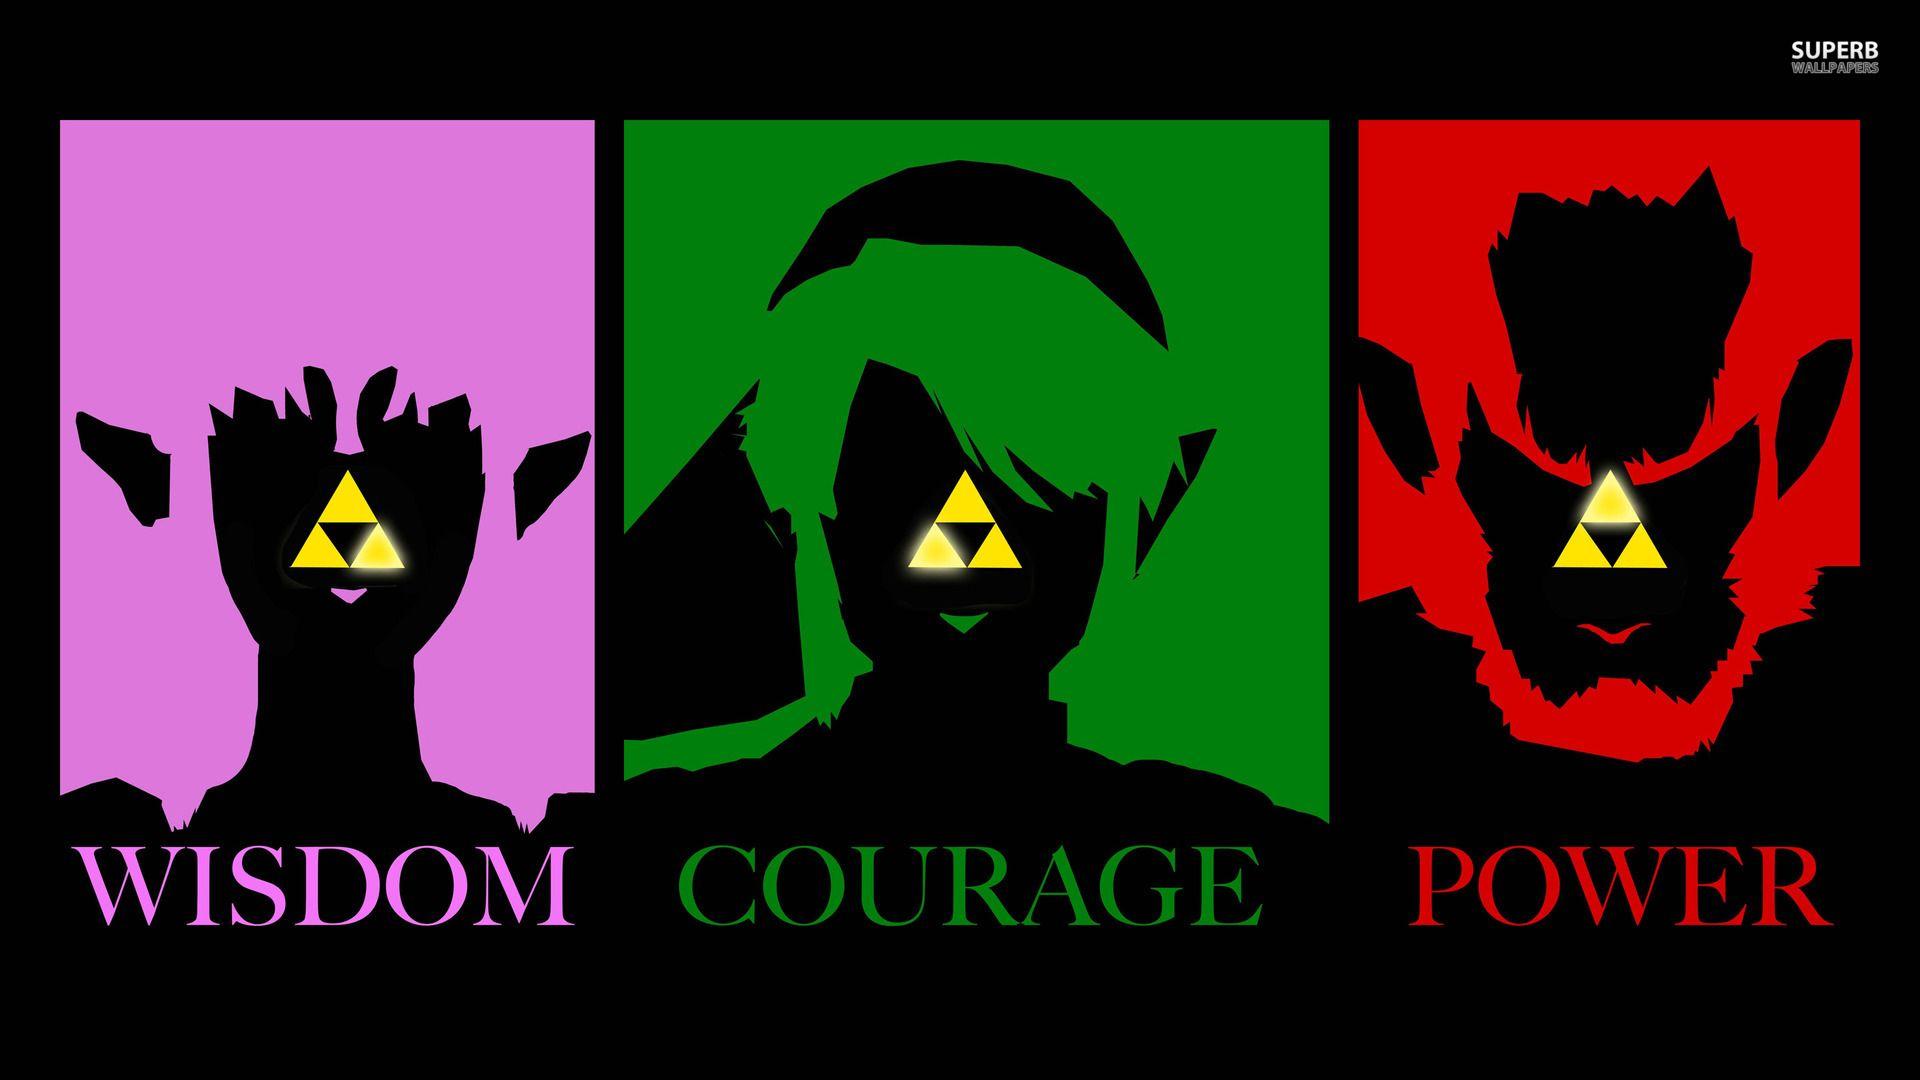 Triforce Legend of Zelda wallpaper wallpaper - #